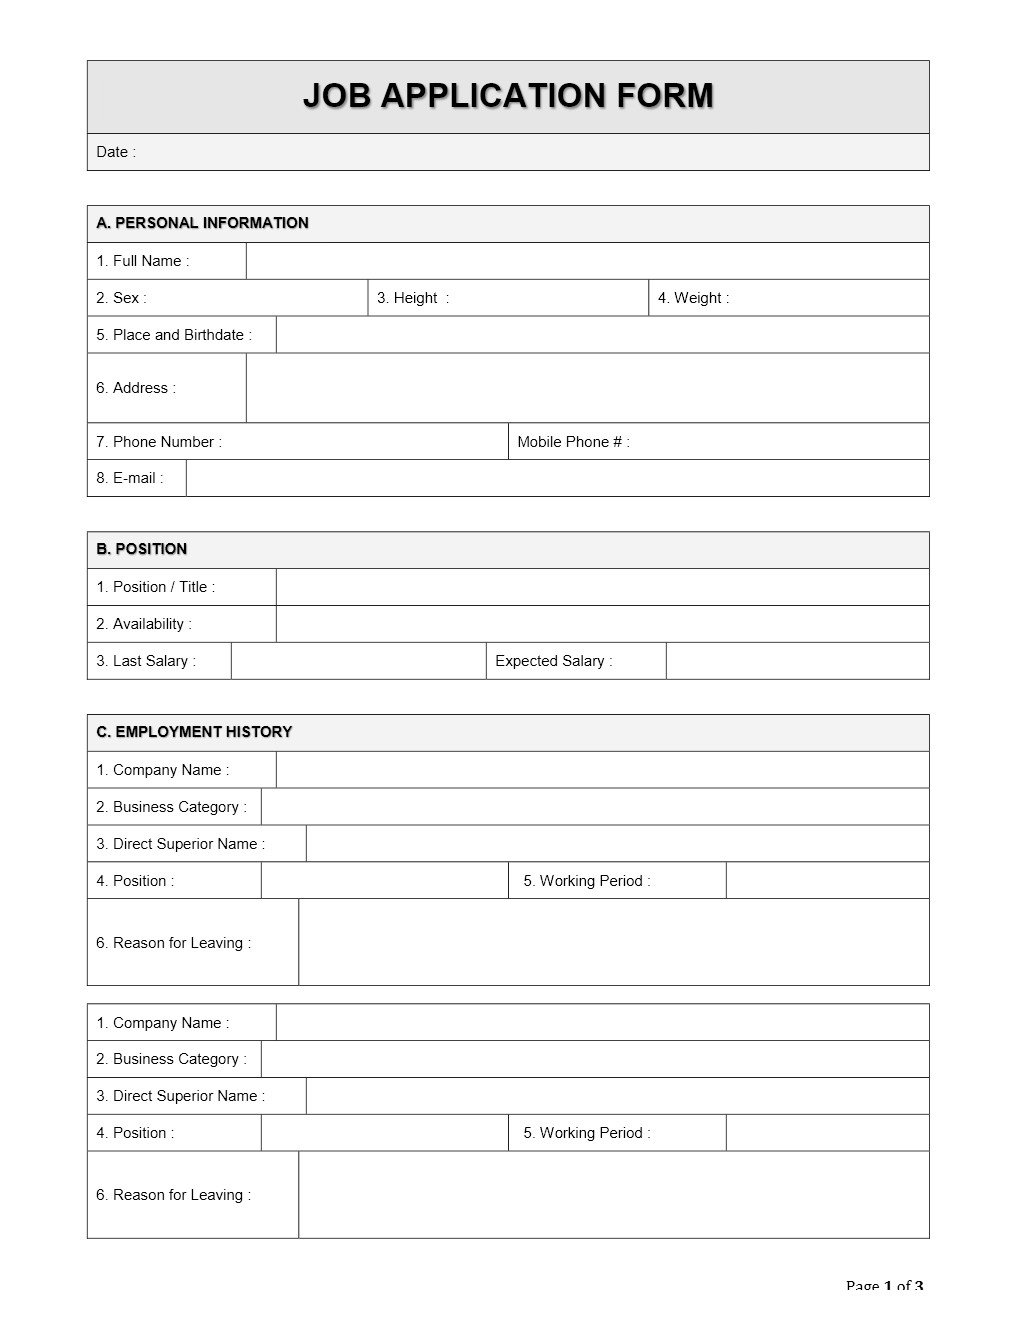 Job Application Template Microsoft Word Employee Job Application form